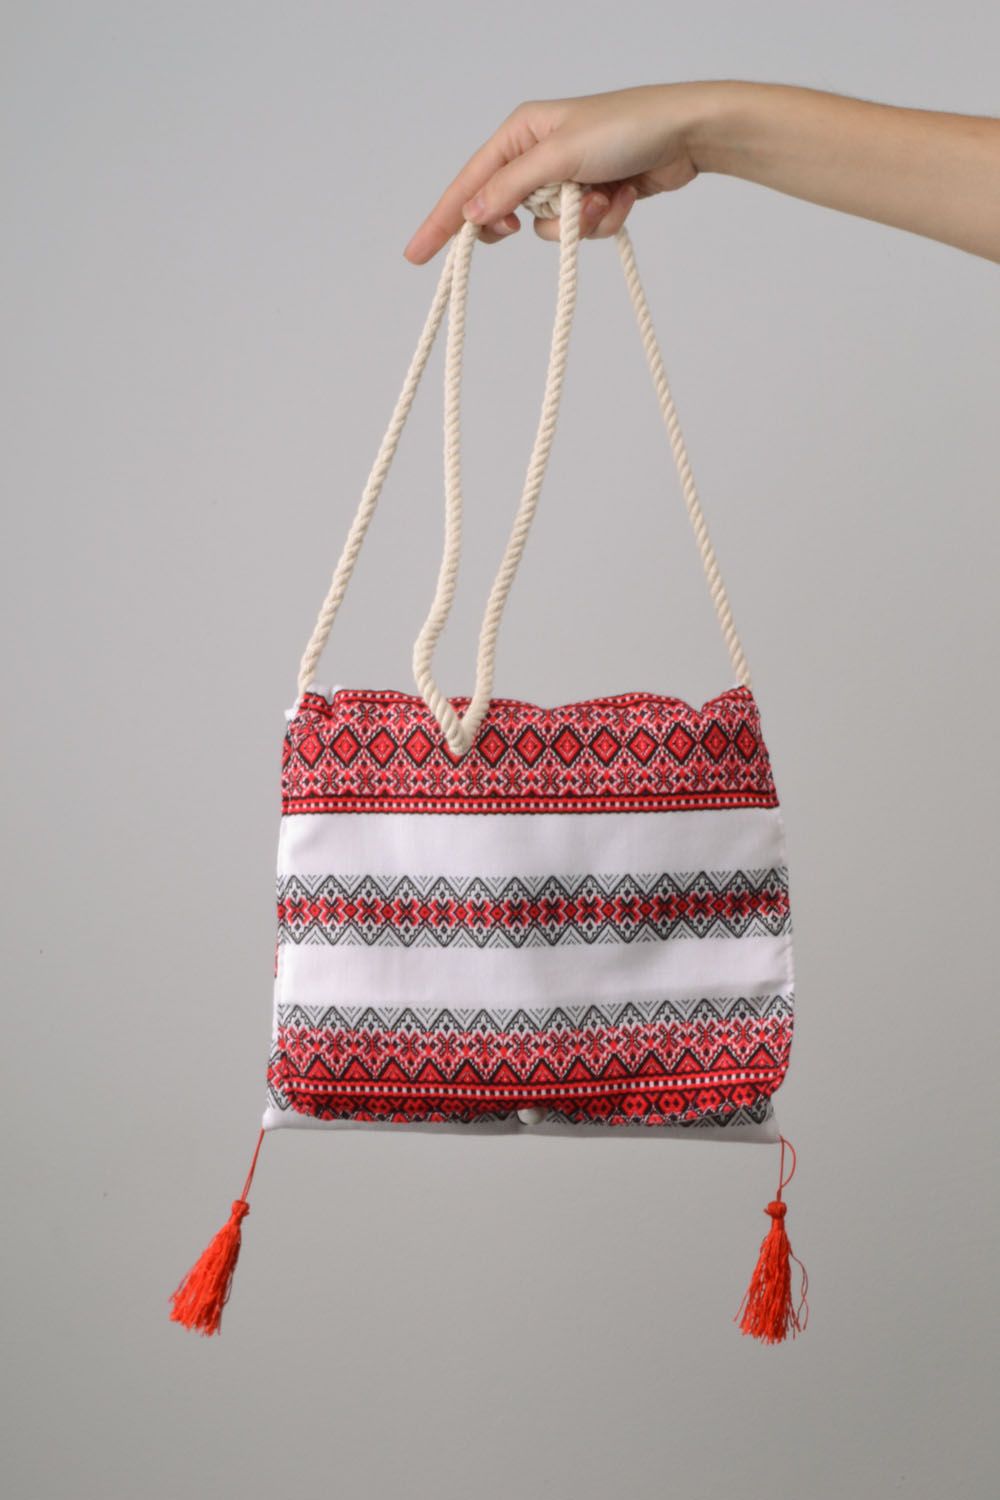 Shoulder bag in ethnic style photo 3